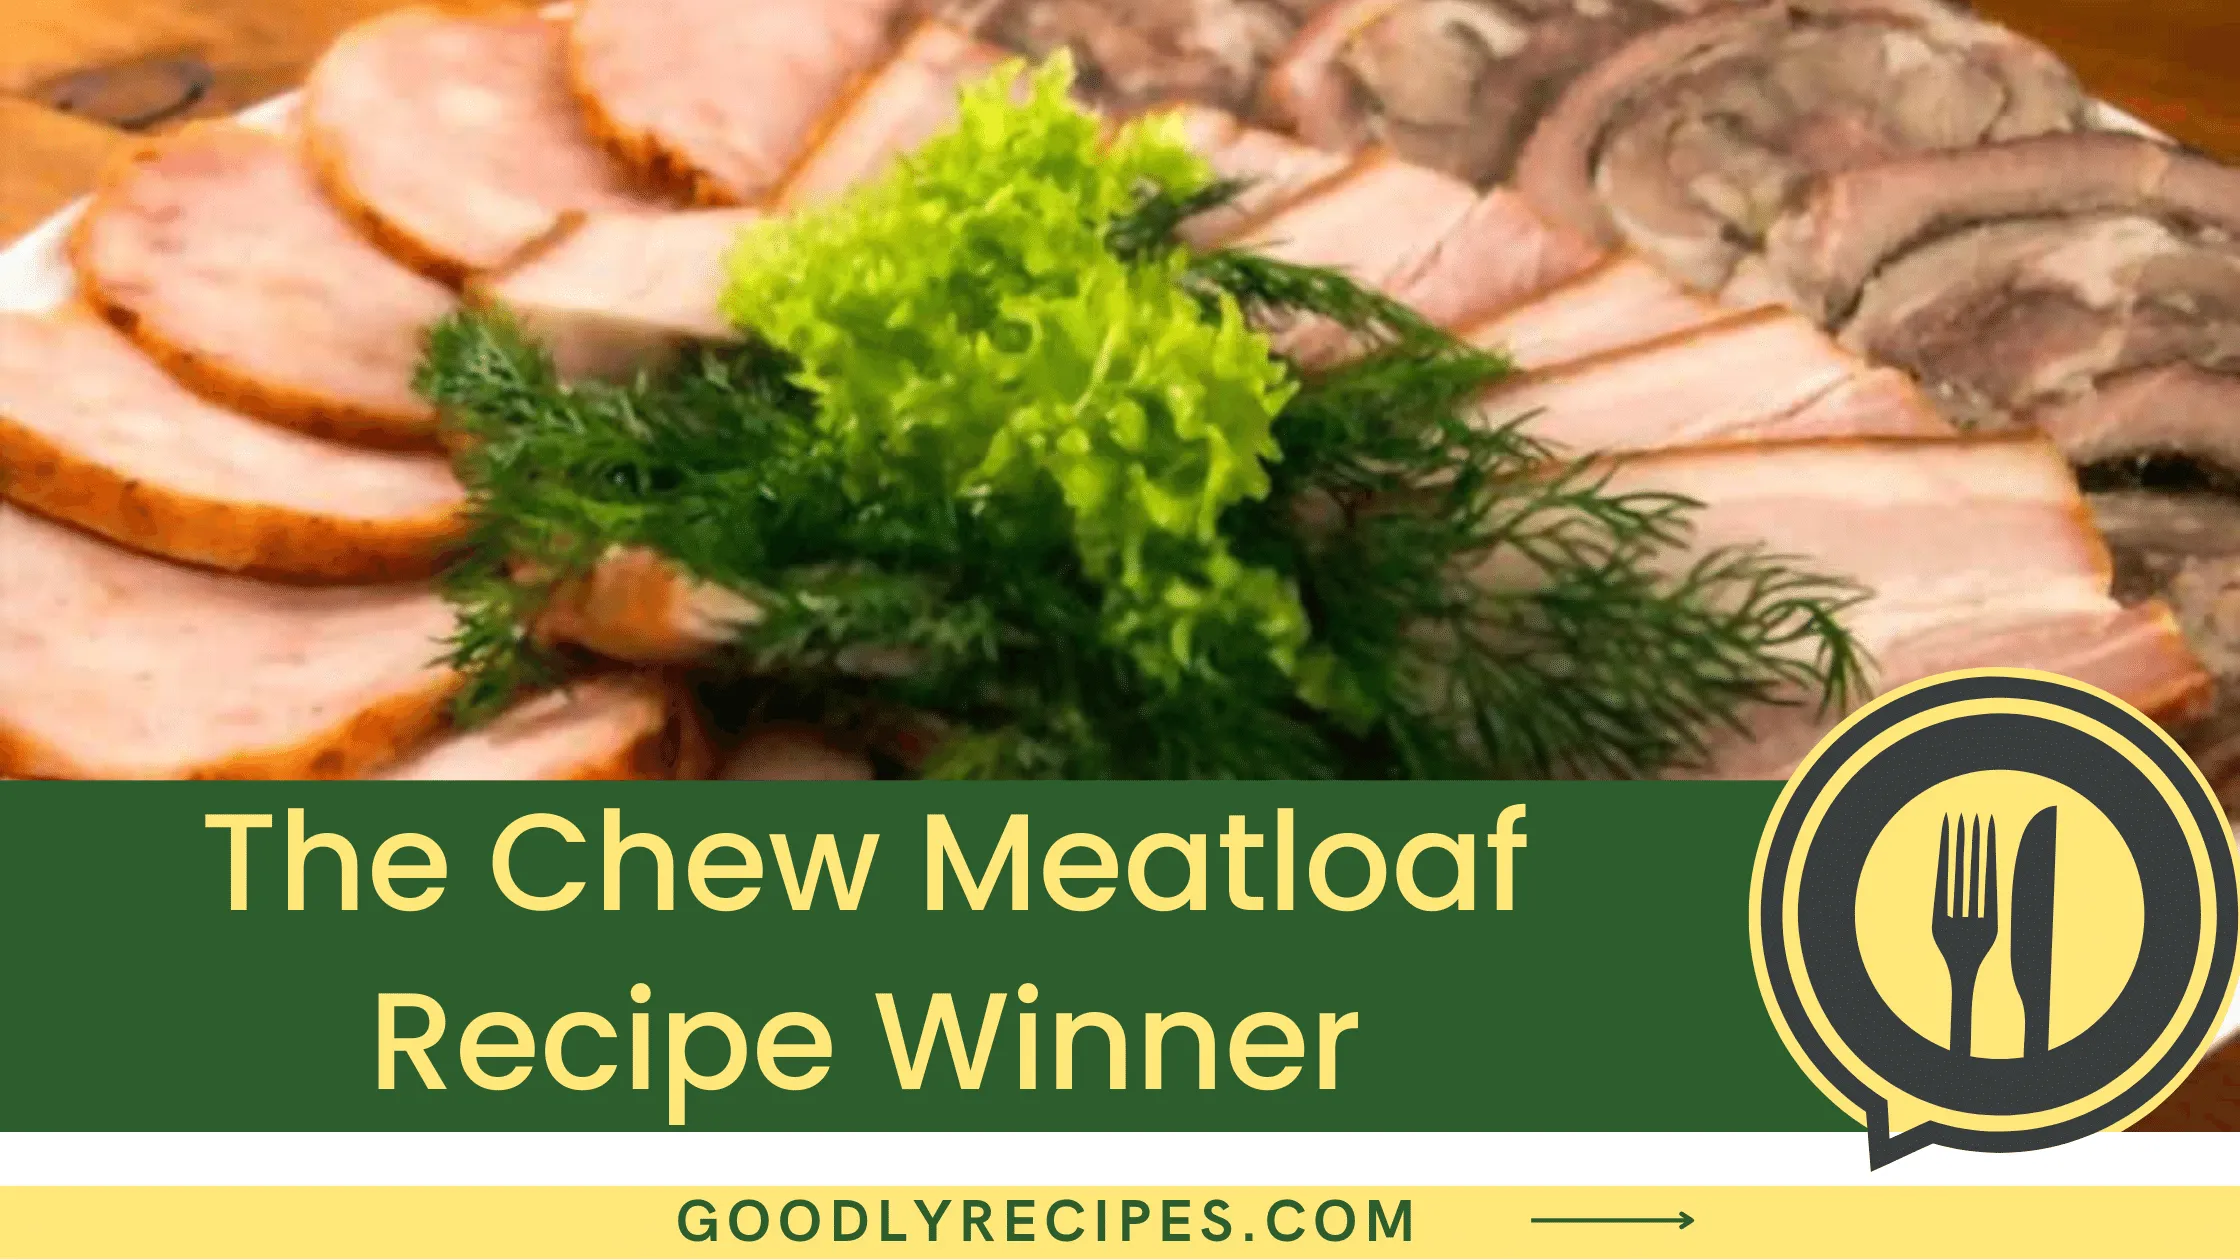 The Chew Meatloaf Recipe Winner